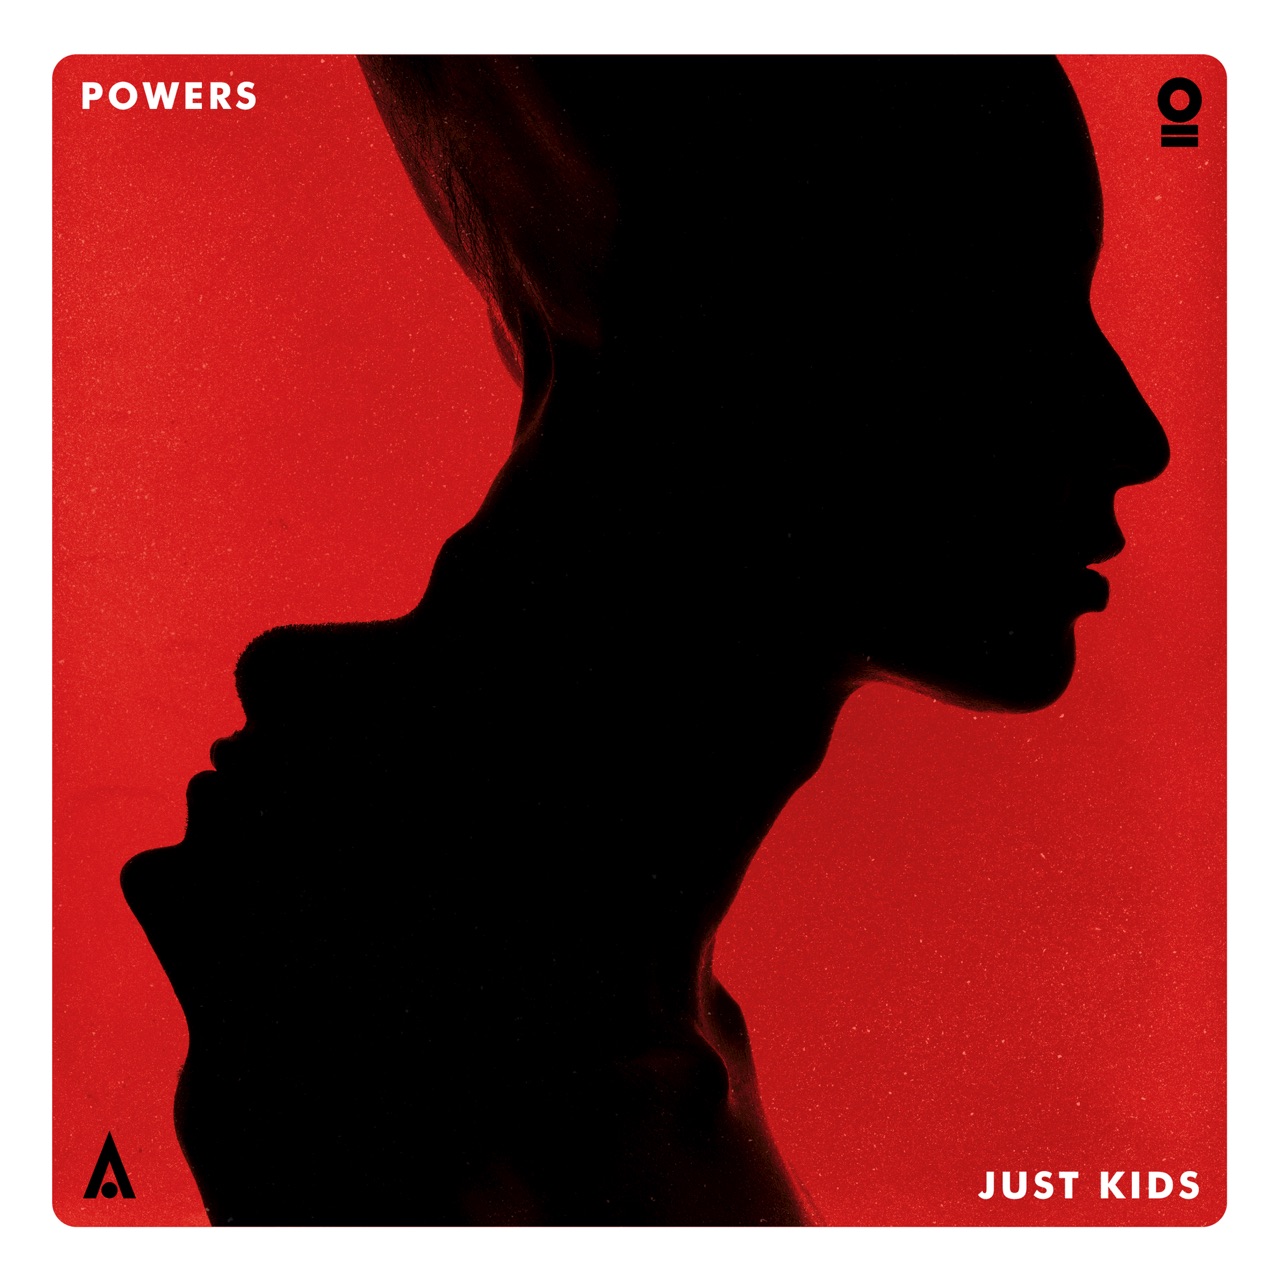 Just Power. Just a Kid песня. Just kidding музыка.